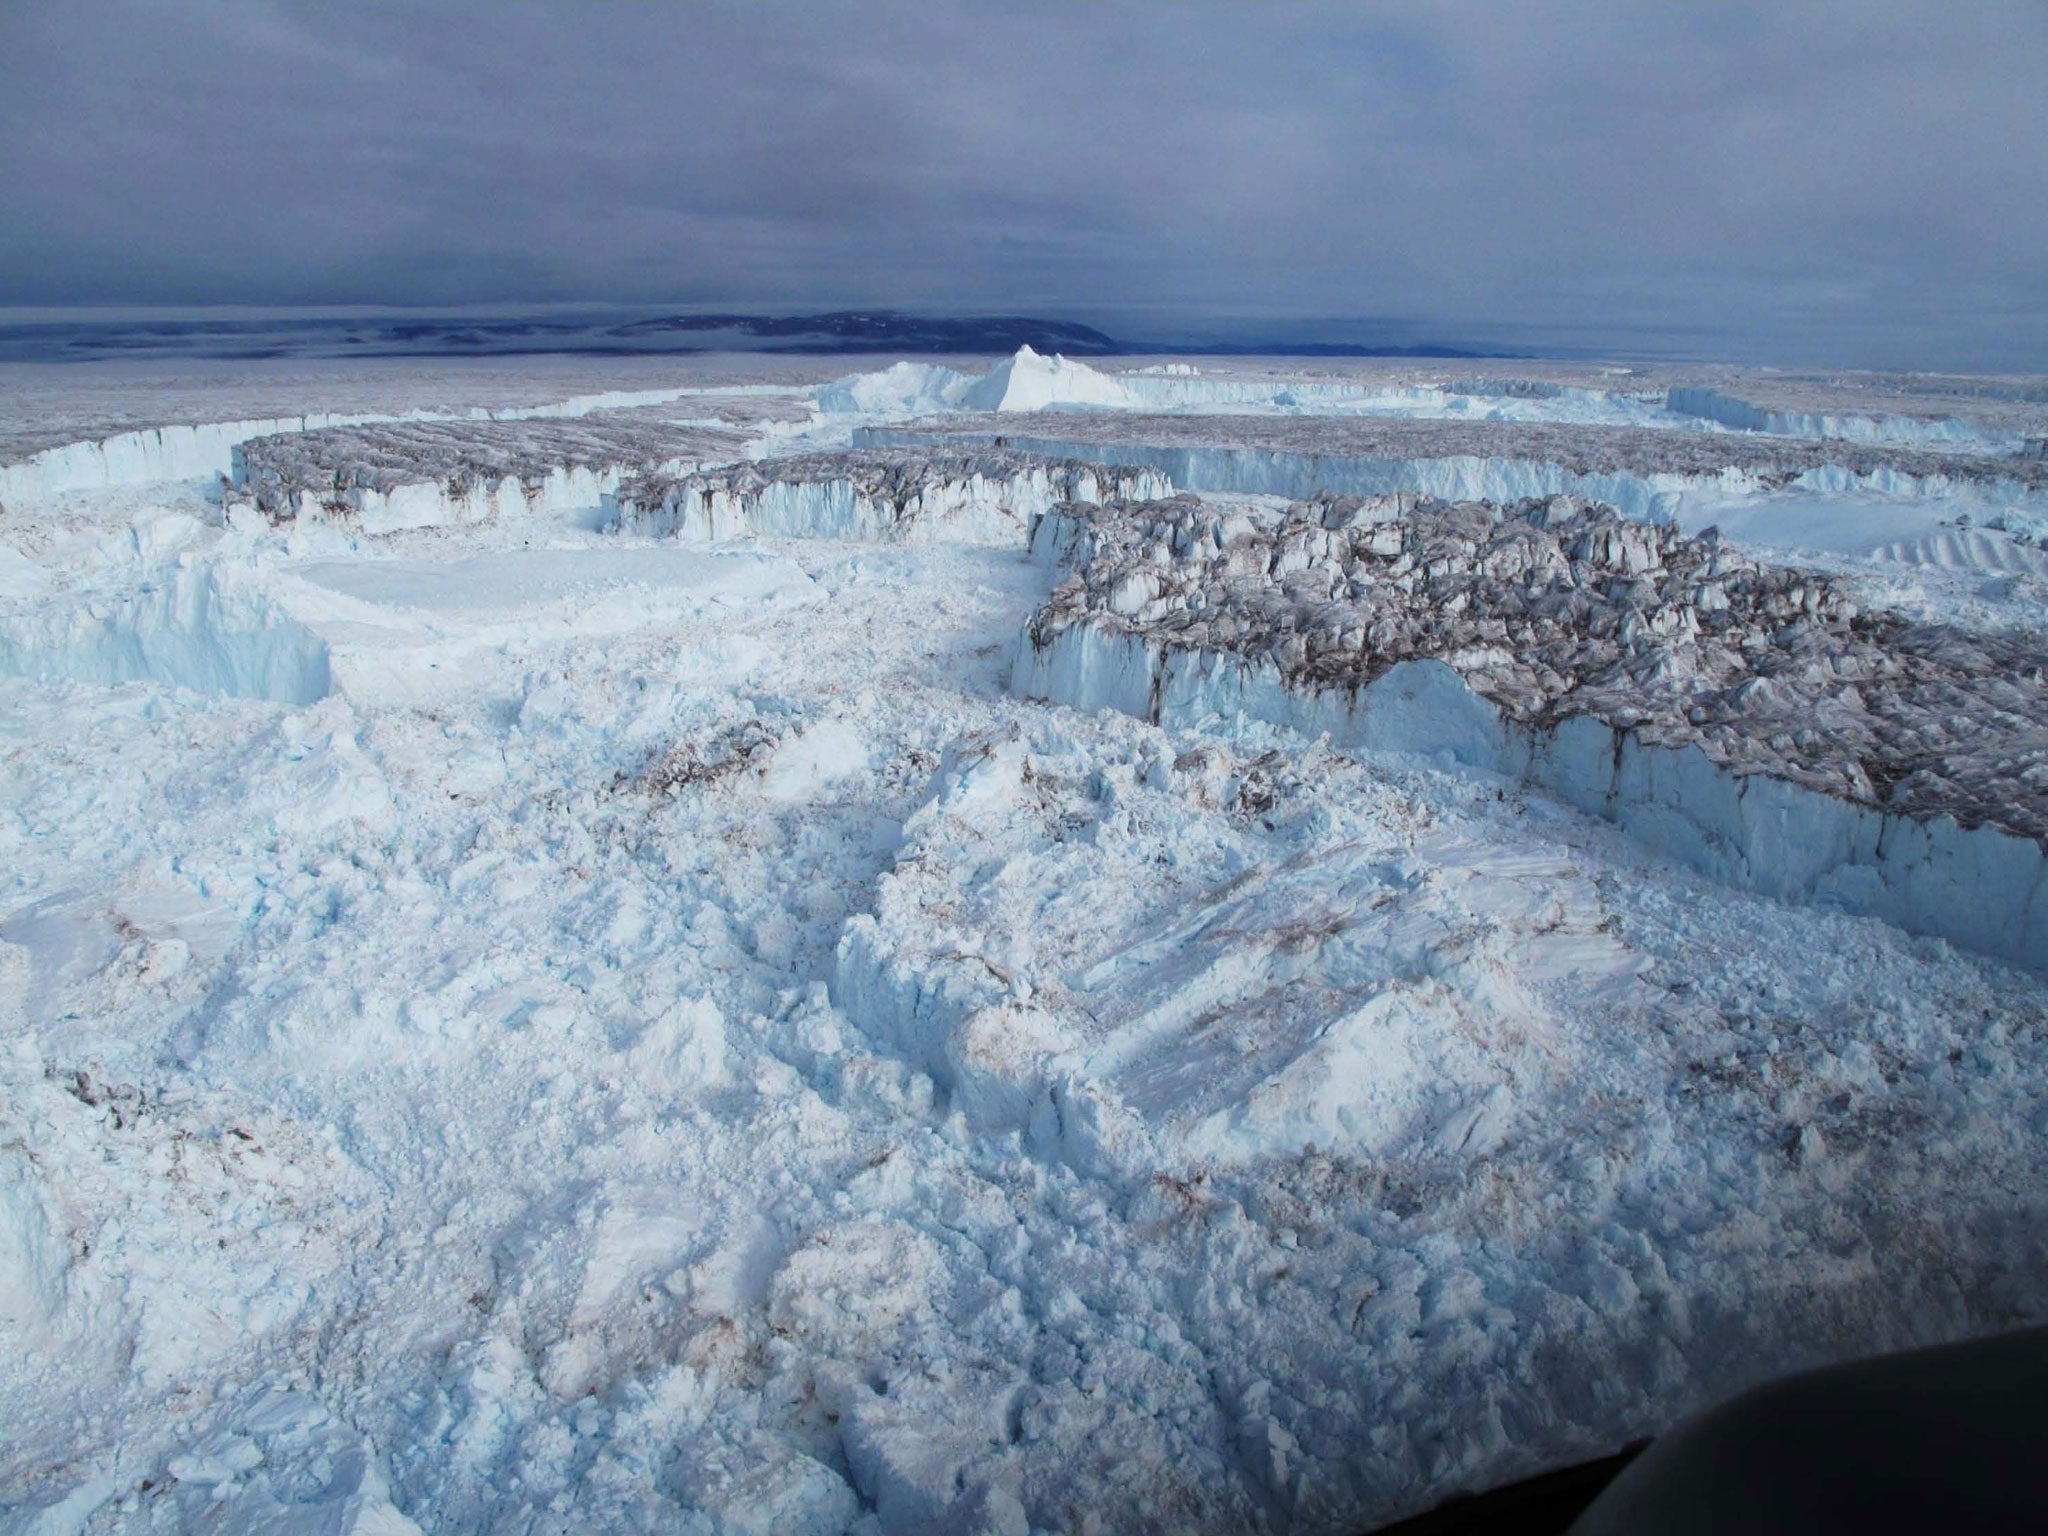 Glaciers in north-east Greenland disintegrate into the ocean